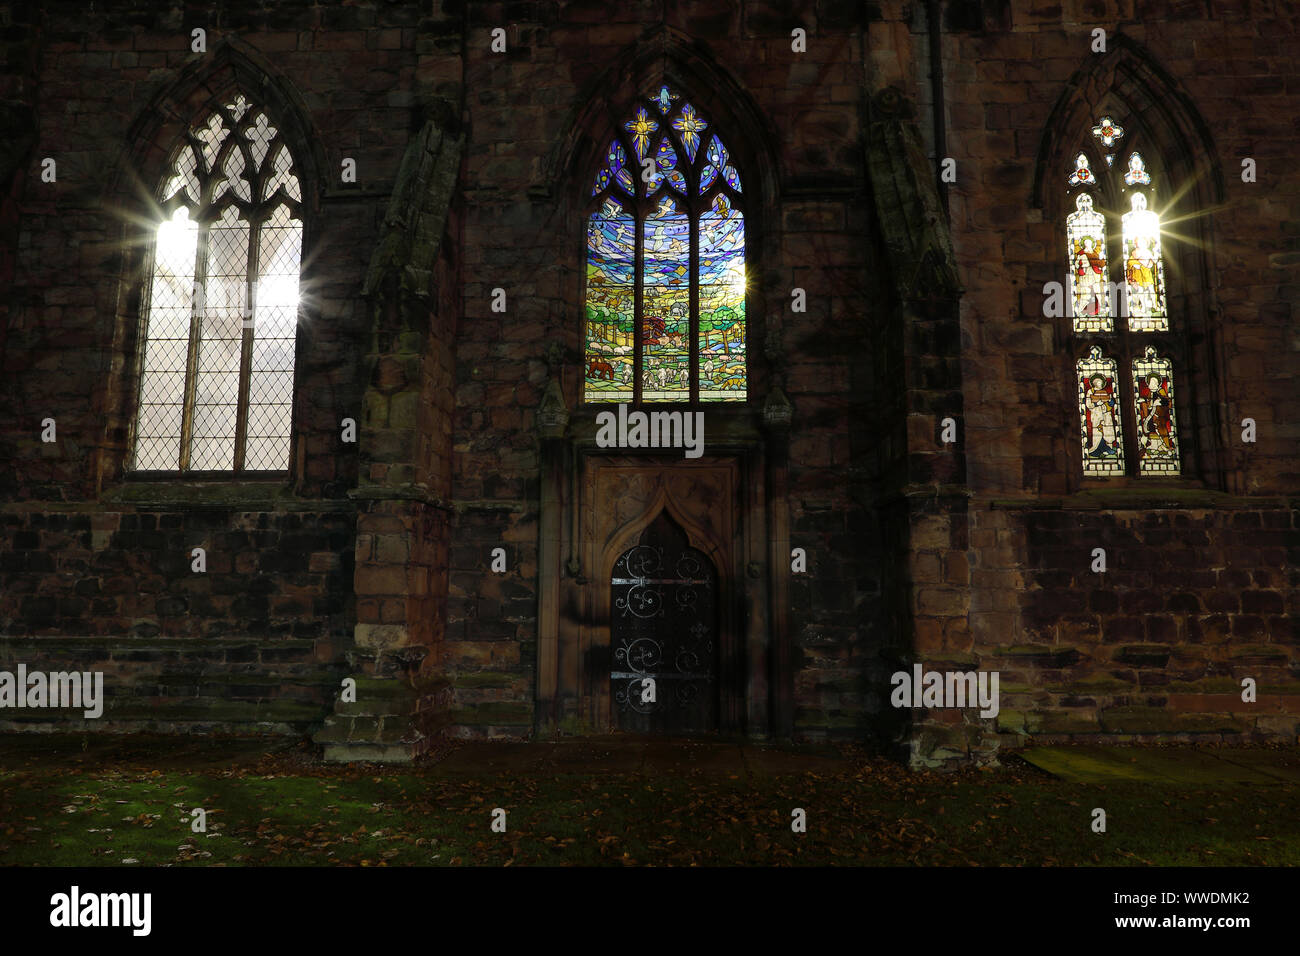 Bourne stained glass window, St Mary's Church, Nantwich Stock Photo